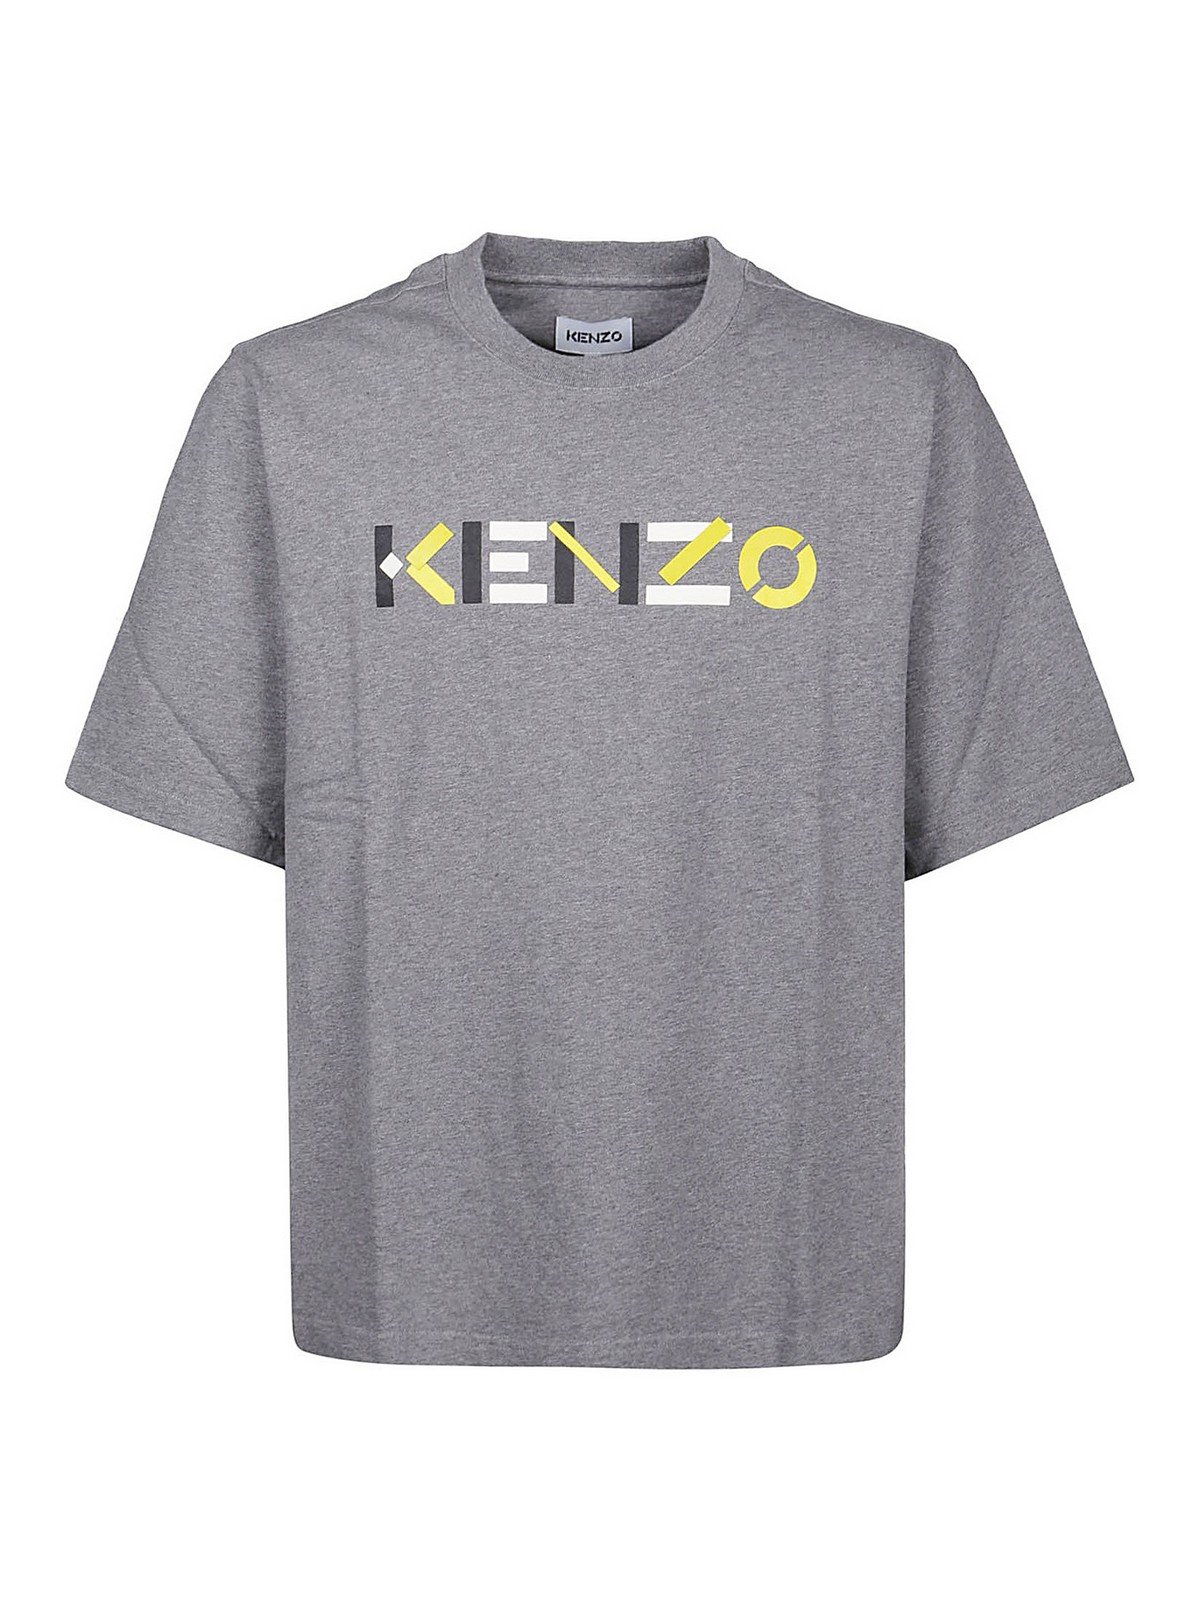 T Shirts Kenzo Brand Print T Shirt 5ts0554sk95 Shop Online At Ikrix